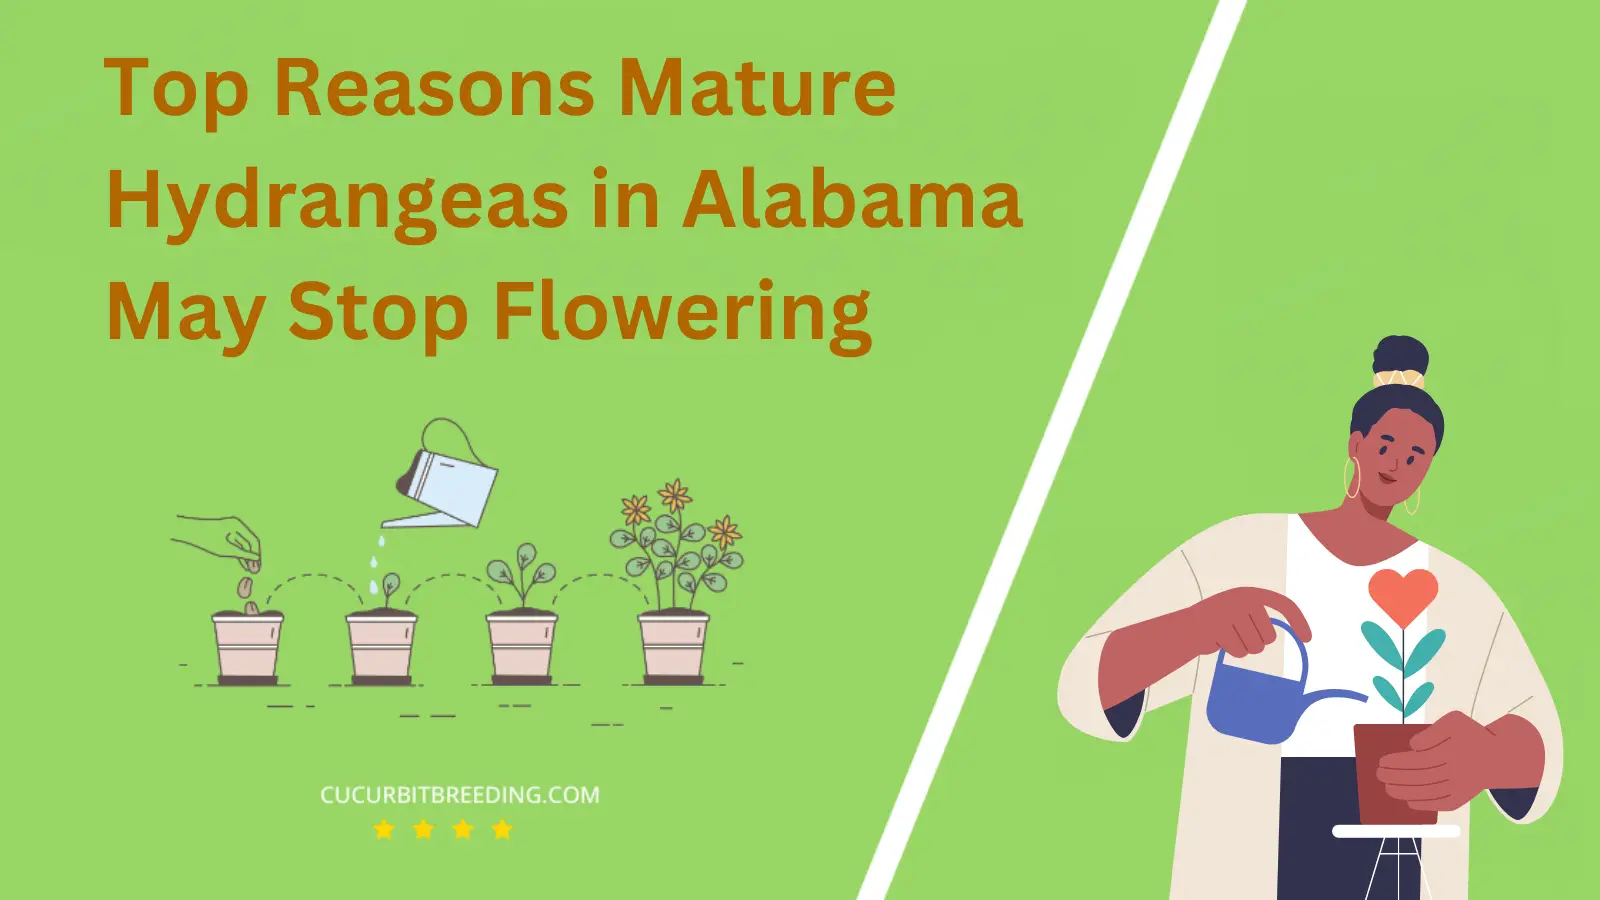 Top Reasons Mature Hydrangeas in Alabama May Stop Flowering